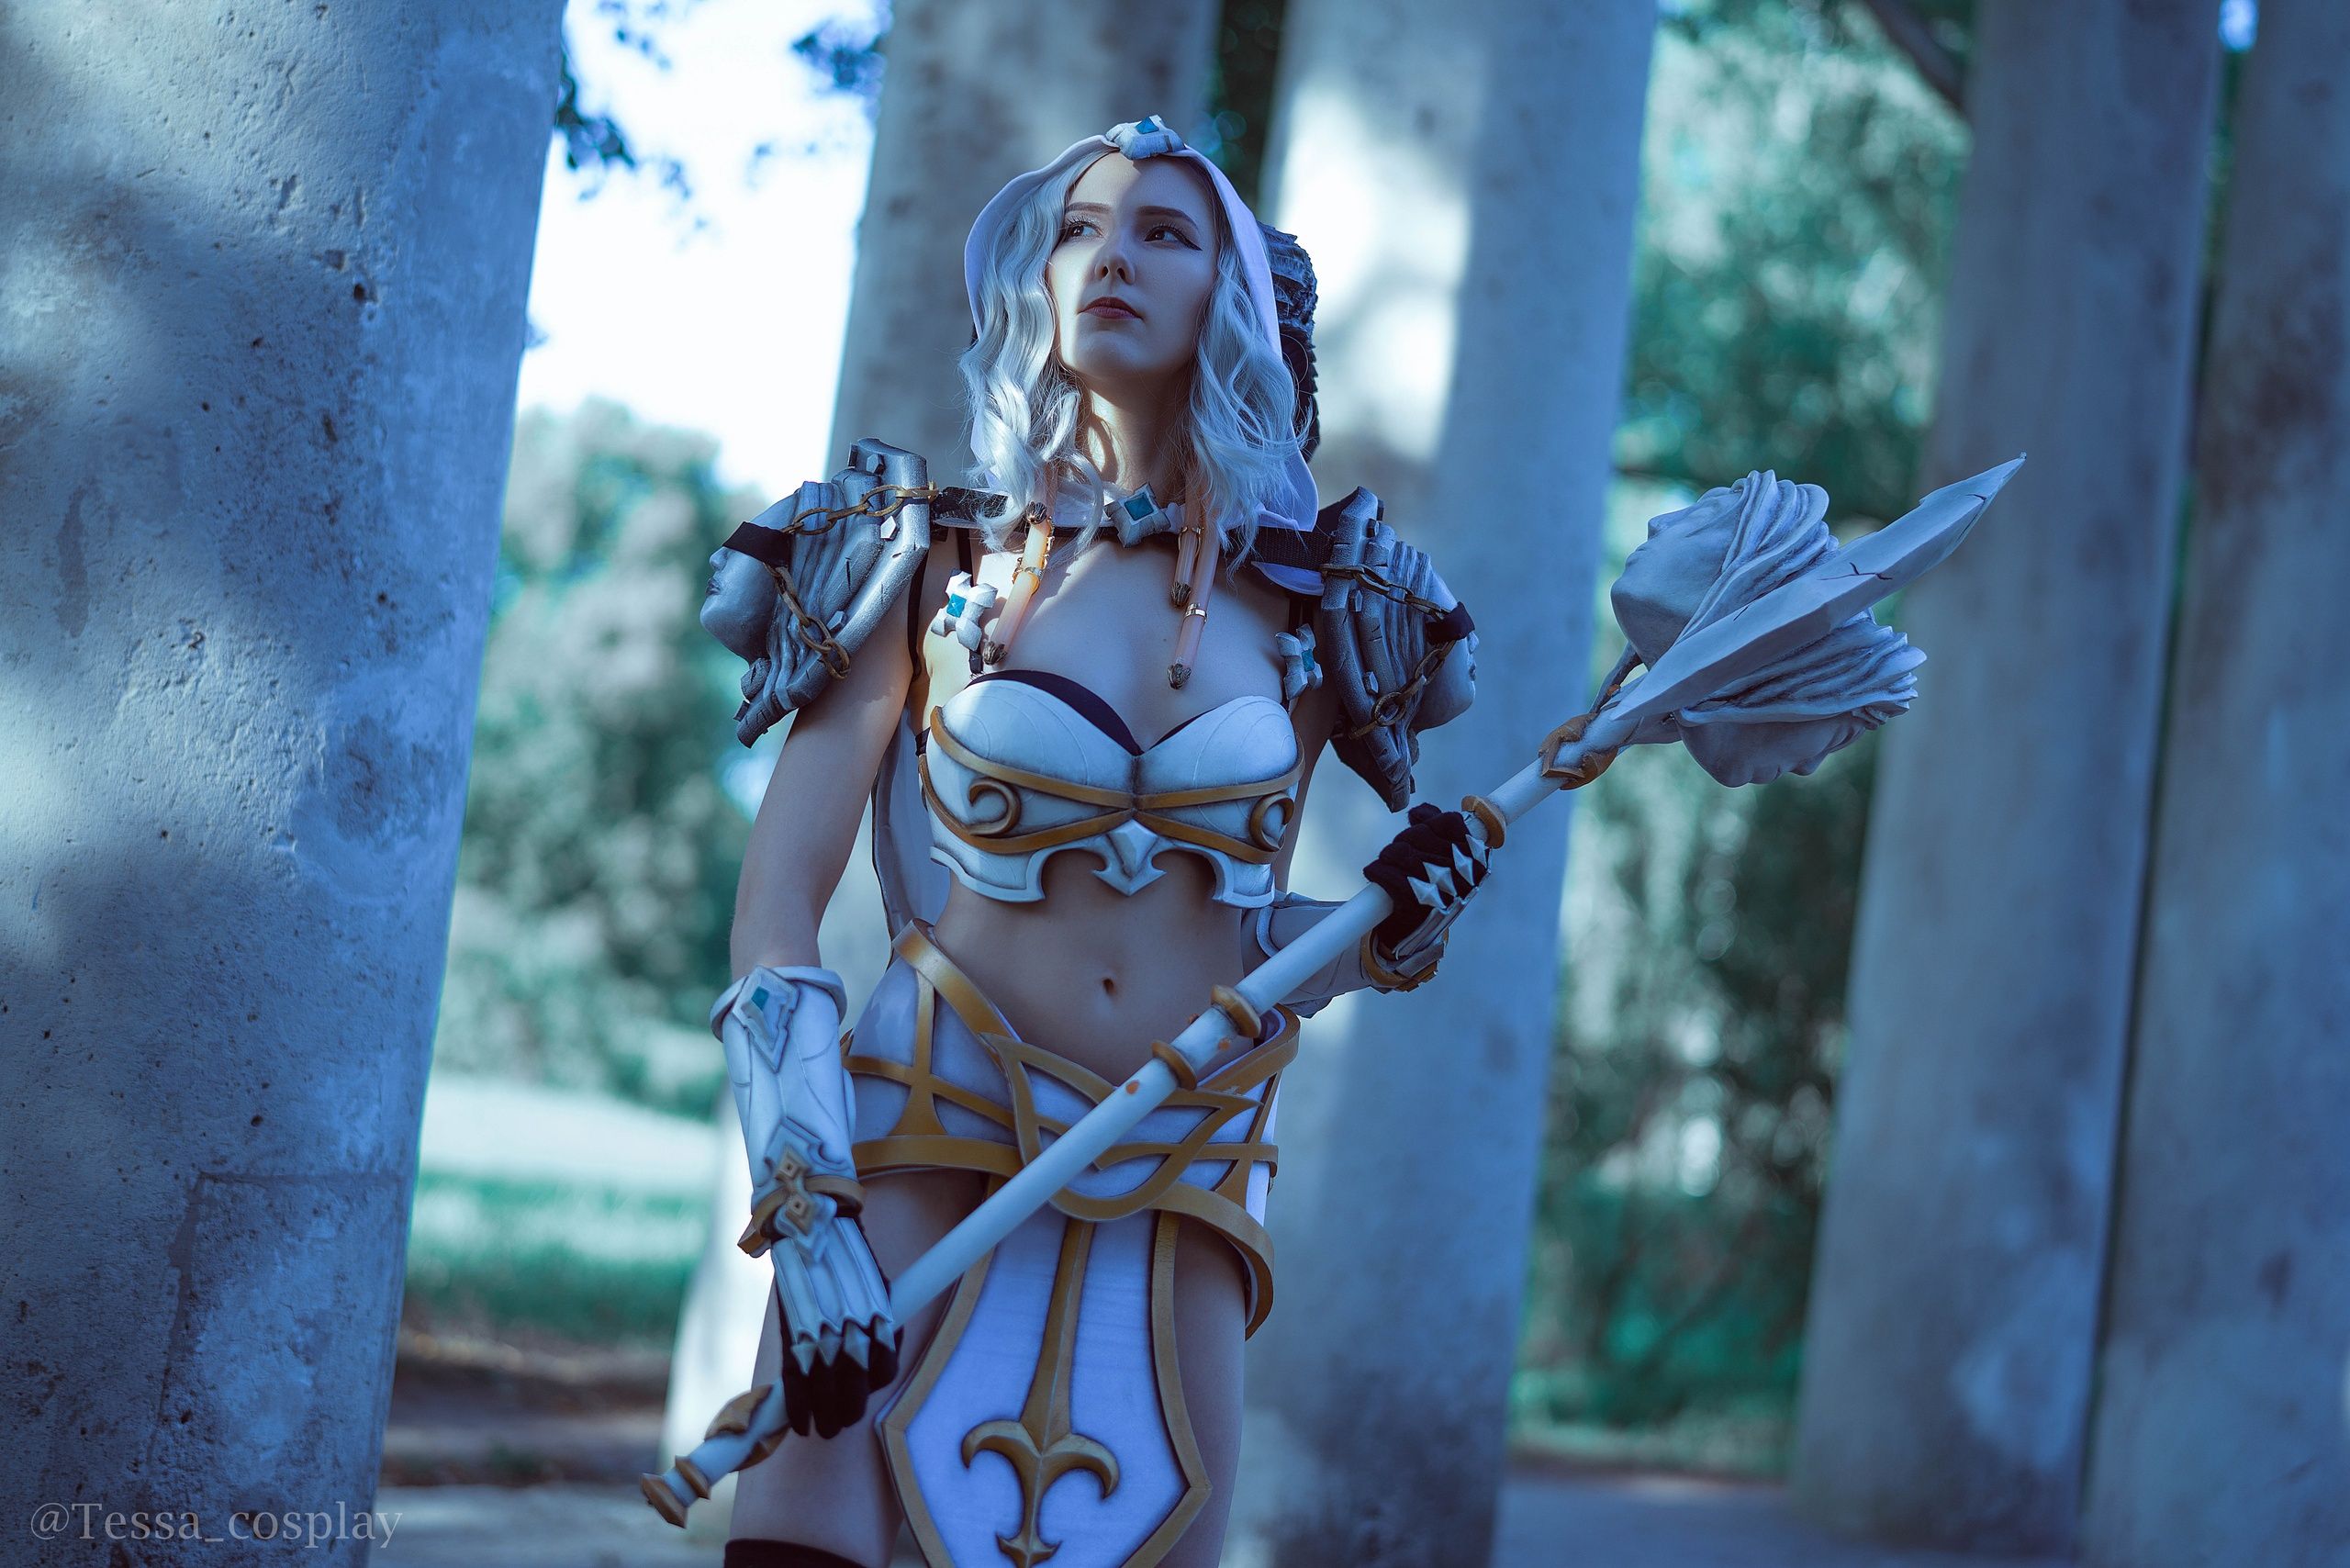 Косплей на дренейку из World of Warcraft. Косплеер: Tessa cosplay. Источник: vk.com/tessa_cosplay